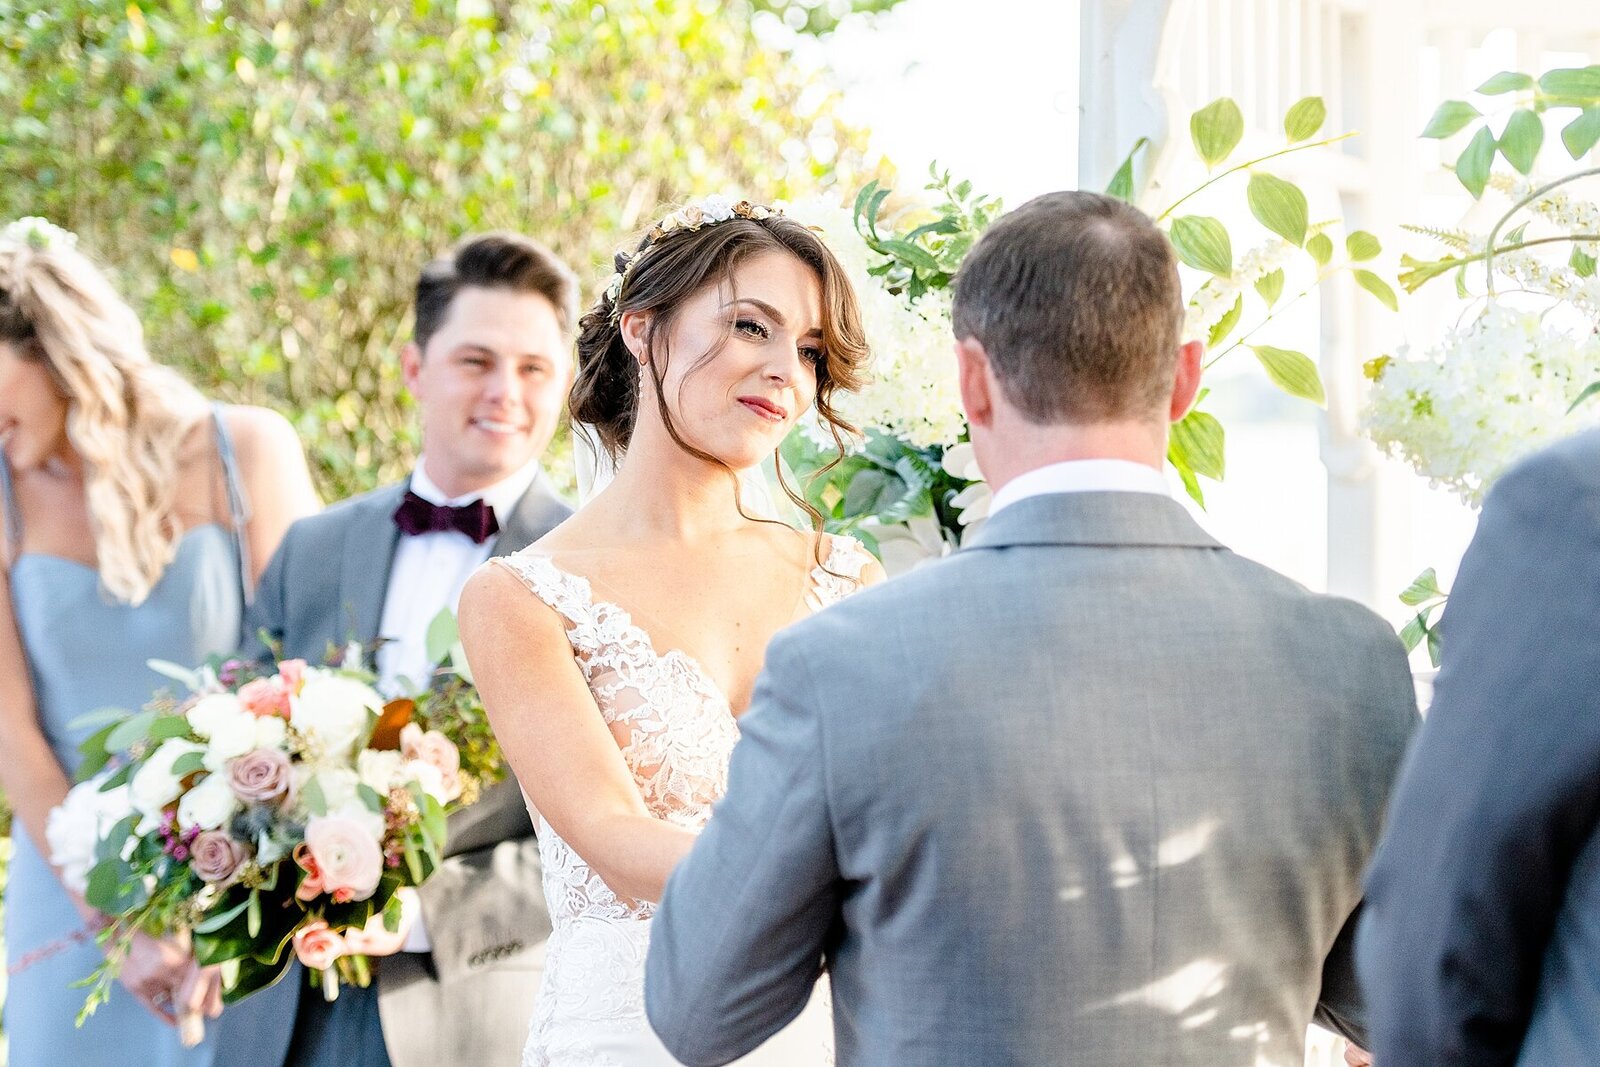 Bride at Ceremony | Orlando Wedding Photographer | Chynna Pacheco Photography